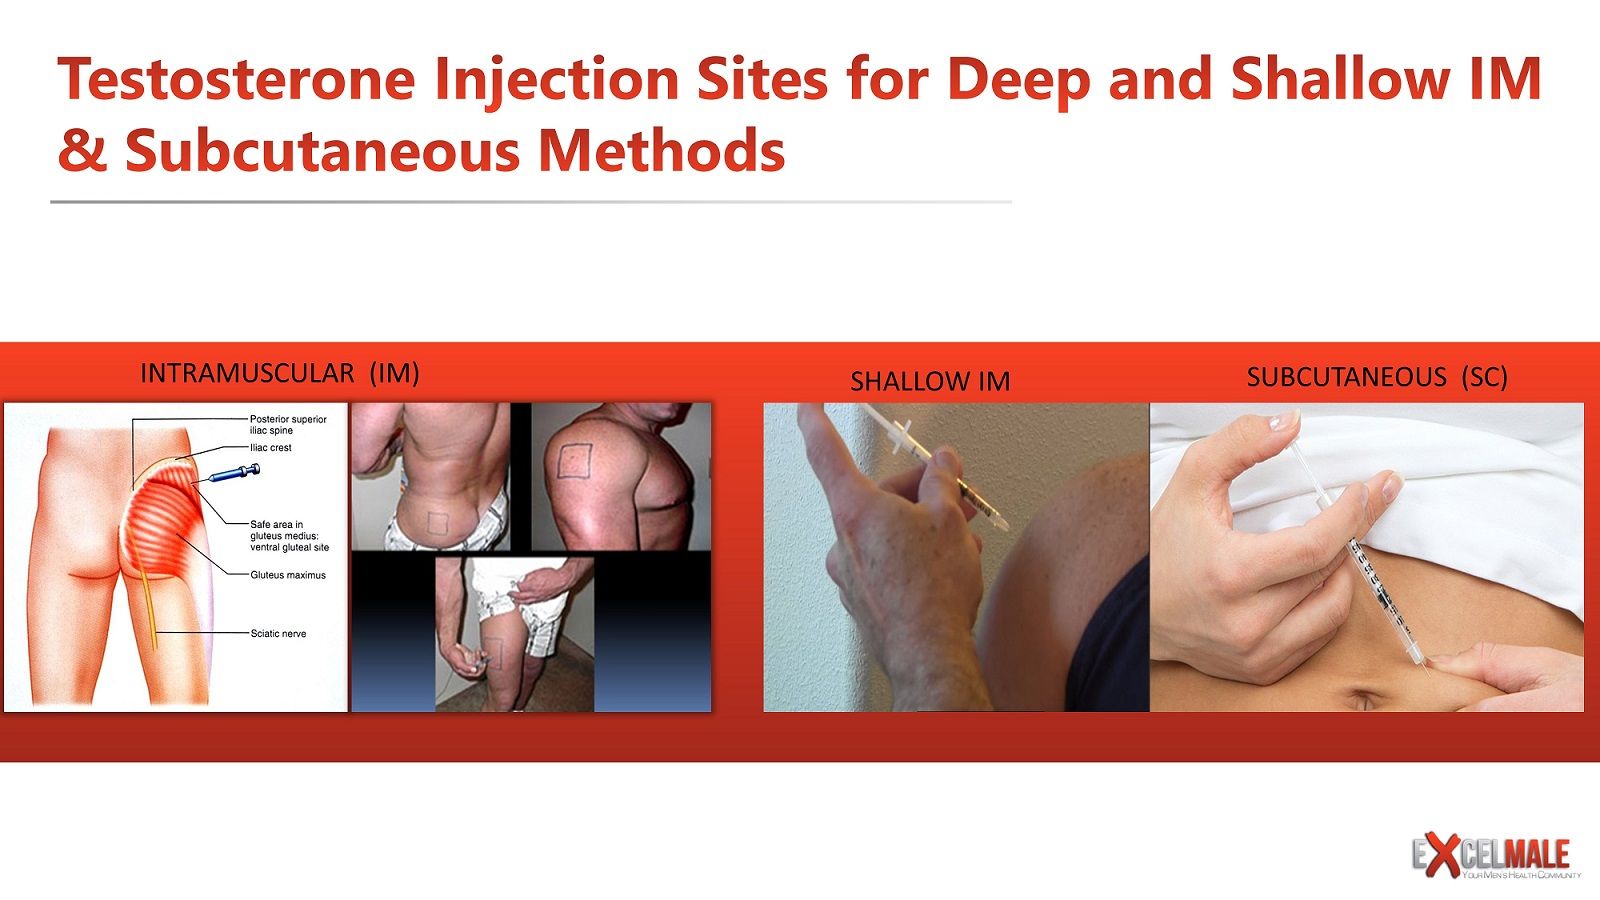 subcutaneous versus intramuscular IM testosterone injections